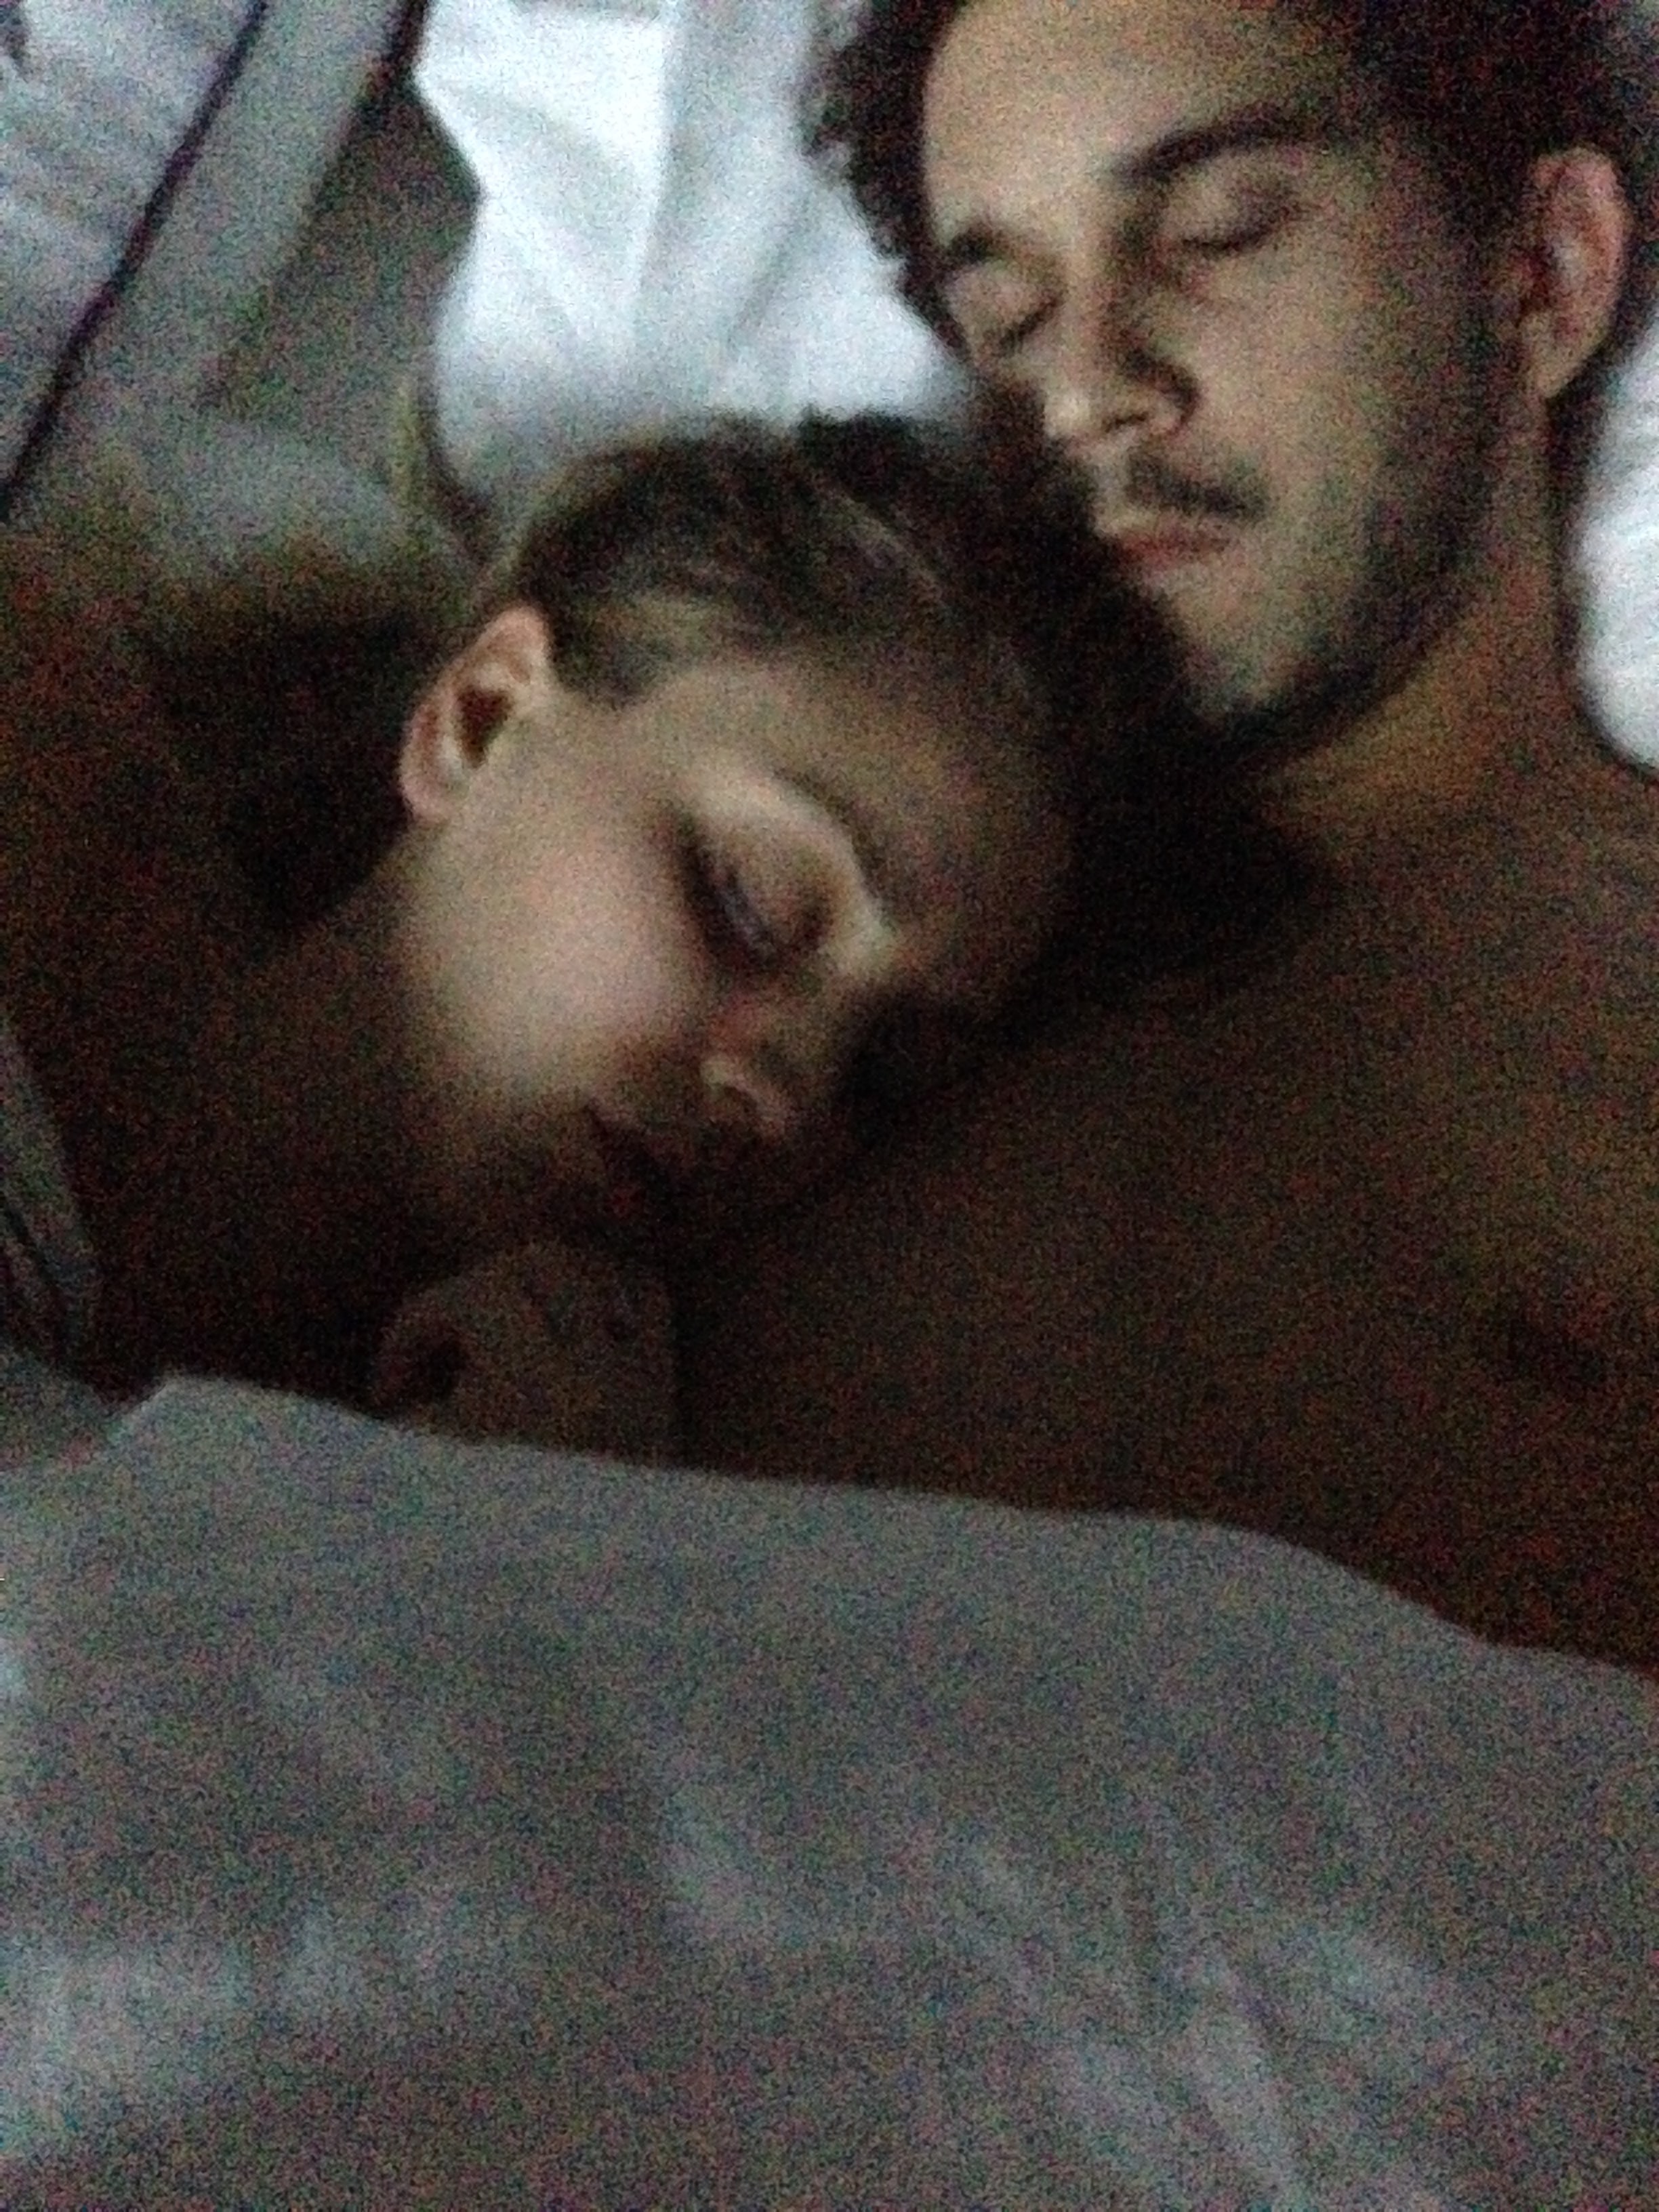 a sleeping selfie of kaley and her boyfriend